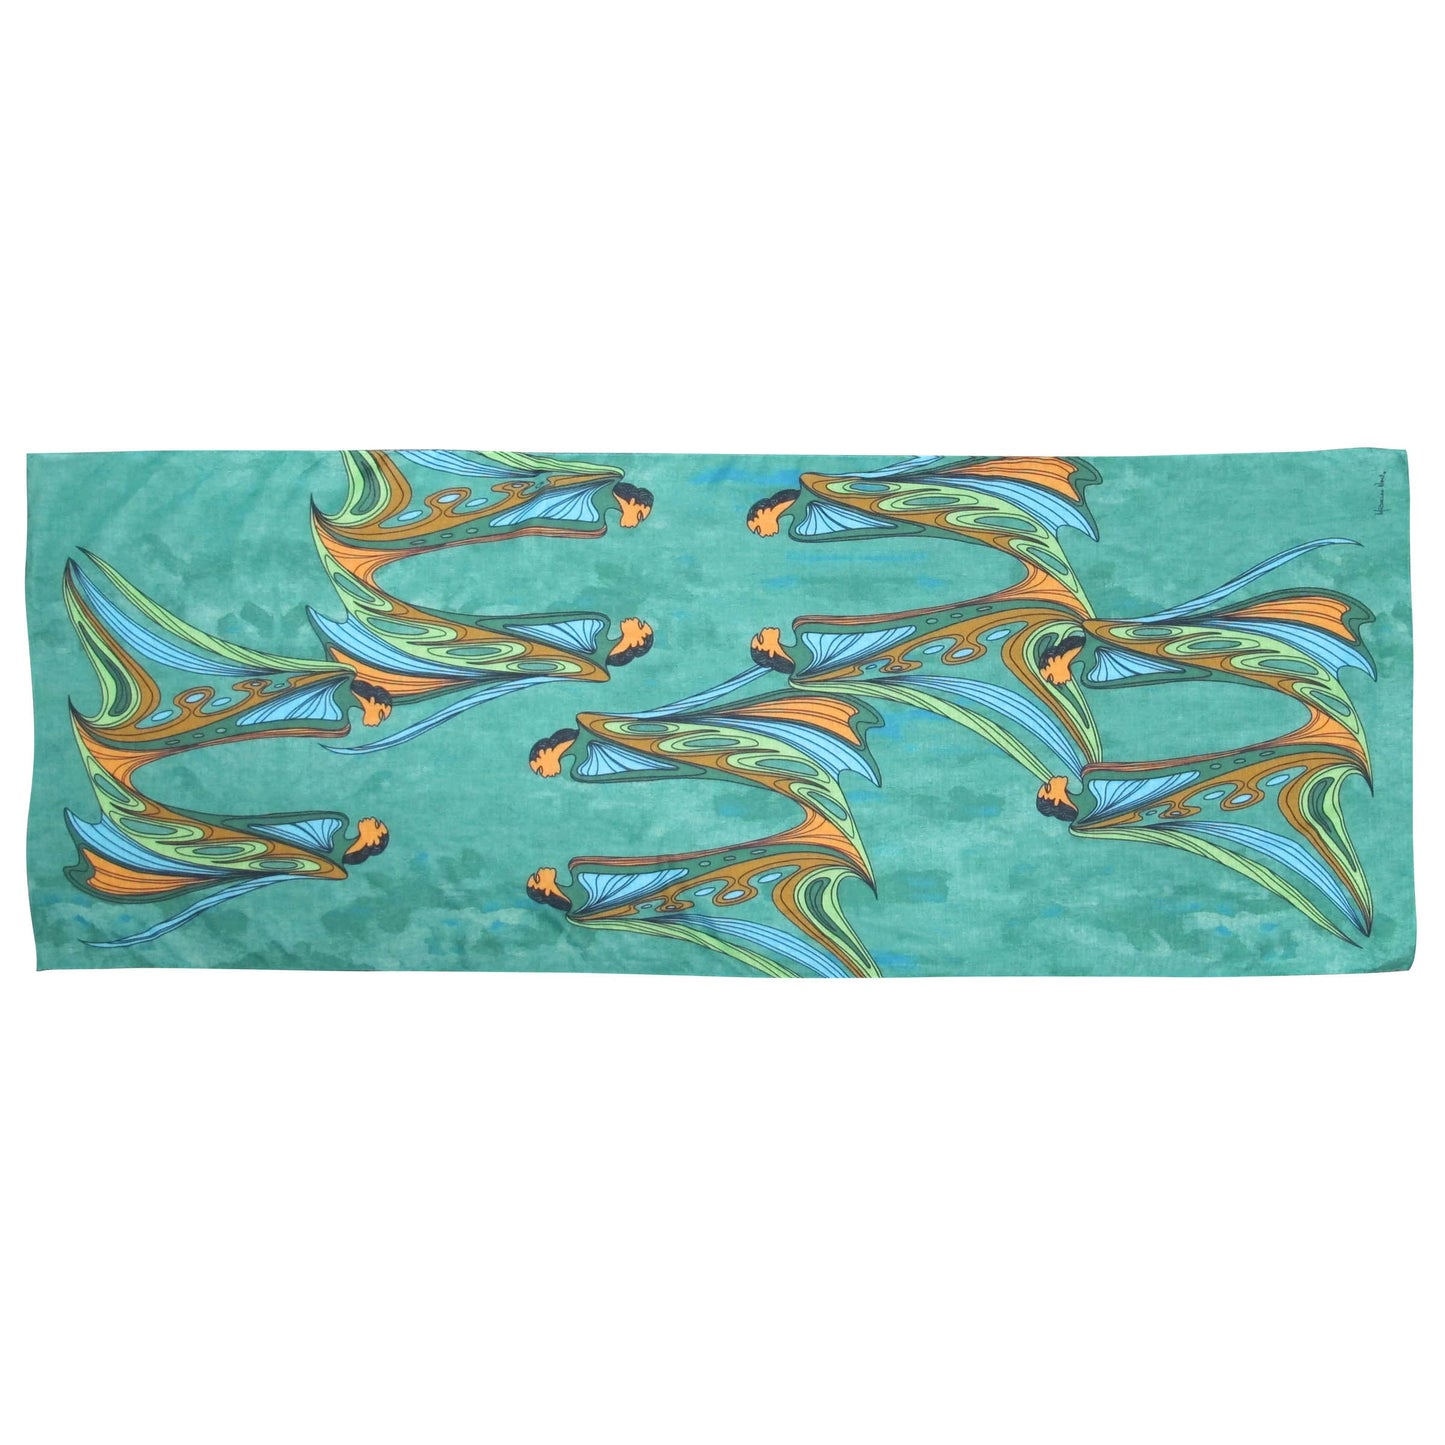 "Friends" scarf design by Native artist Maxine Noel